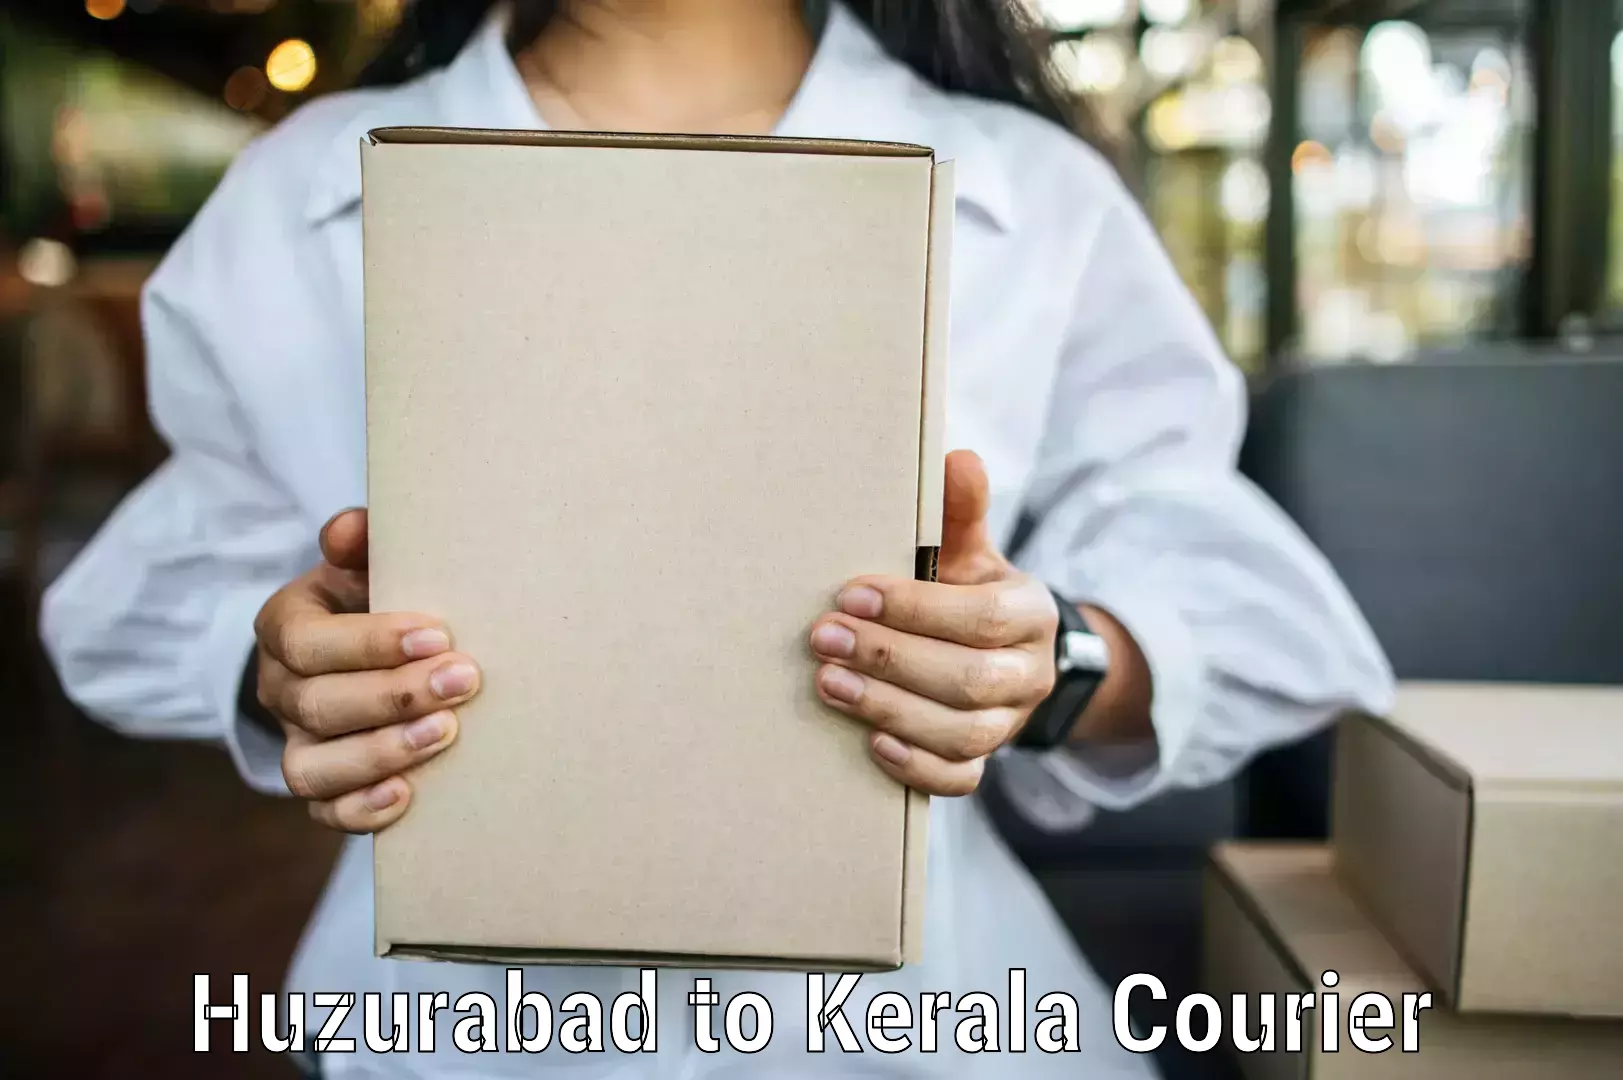 Courier service comparison Huzurabad to Kiliyanthara